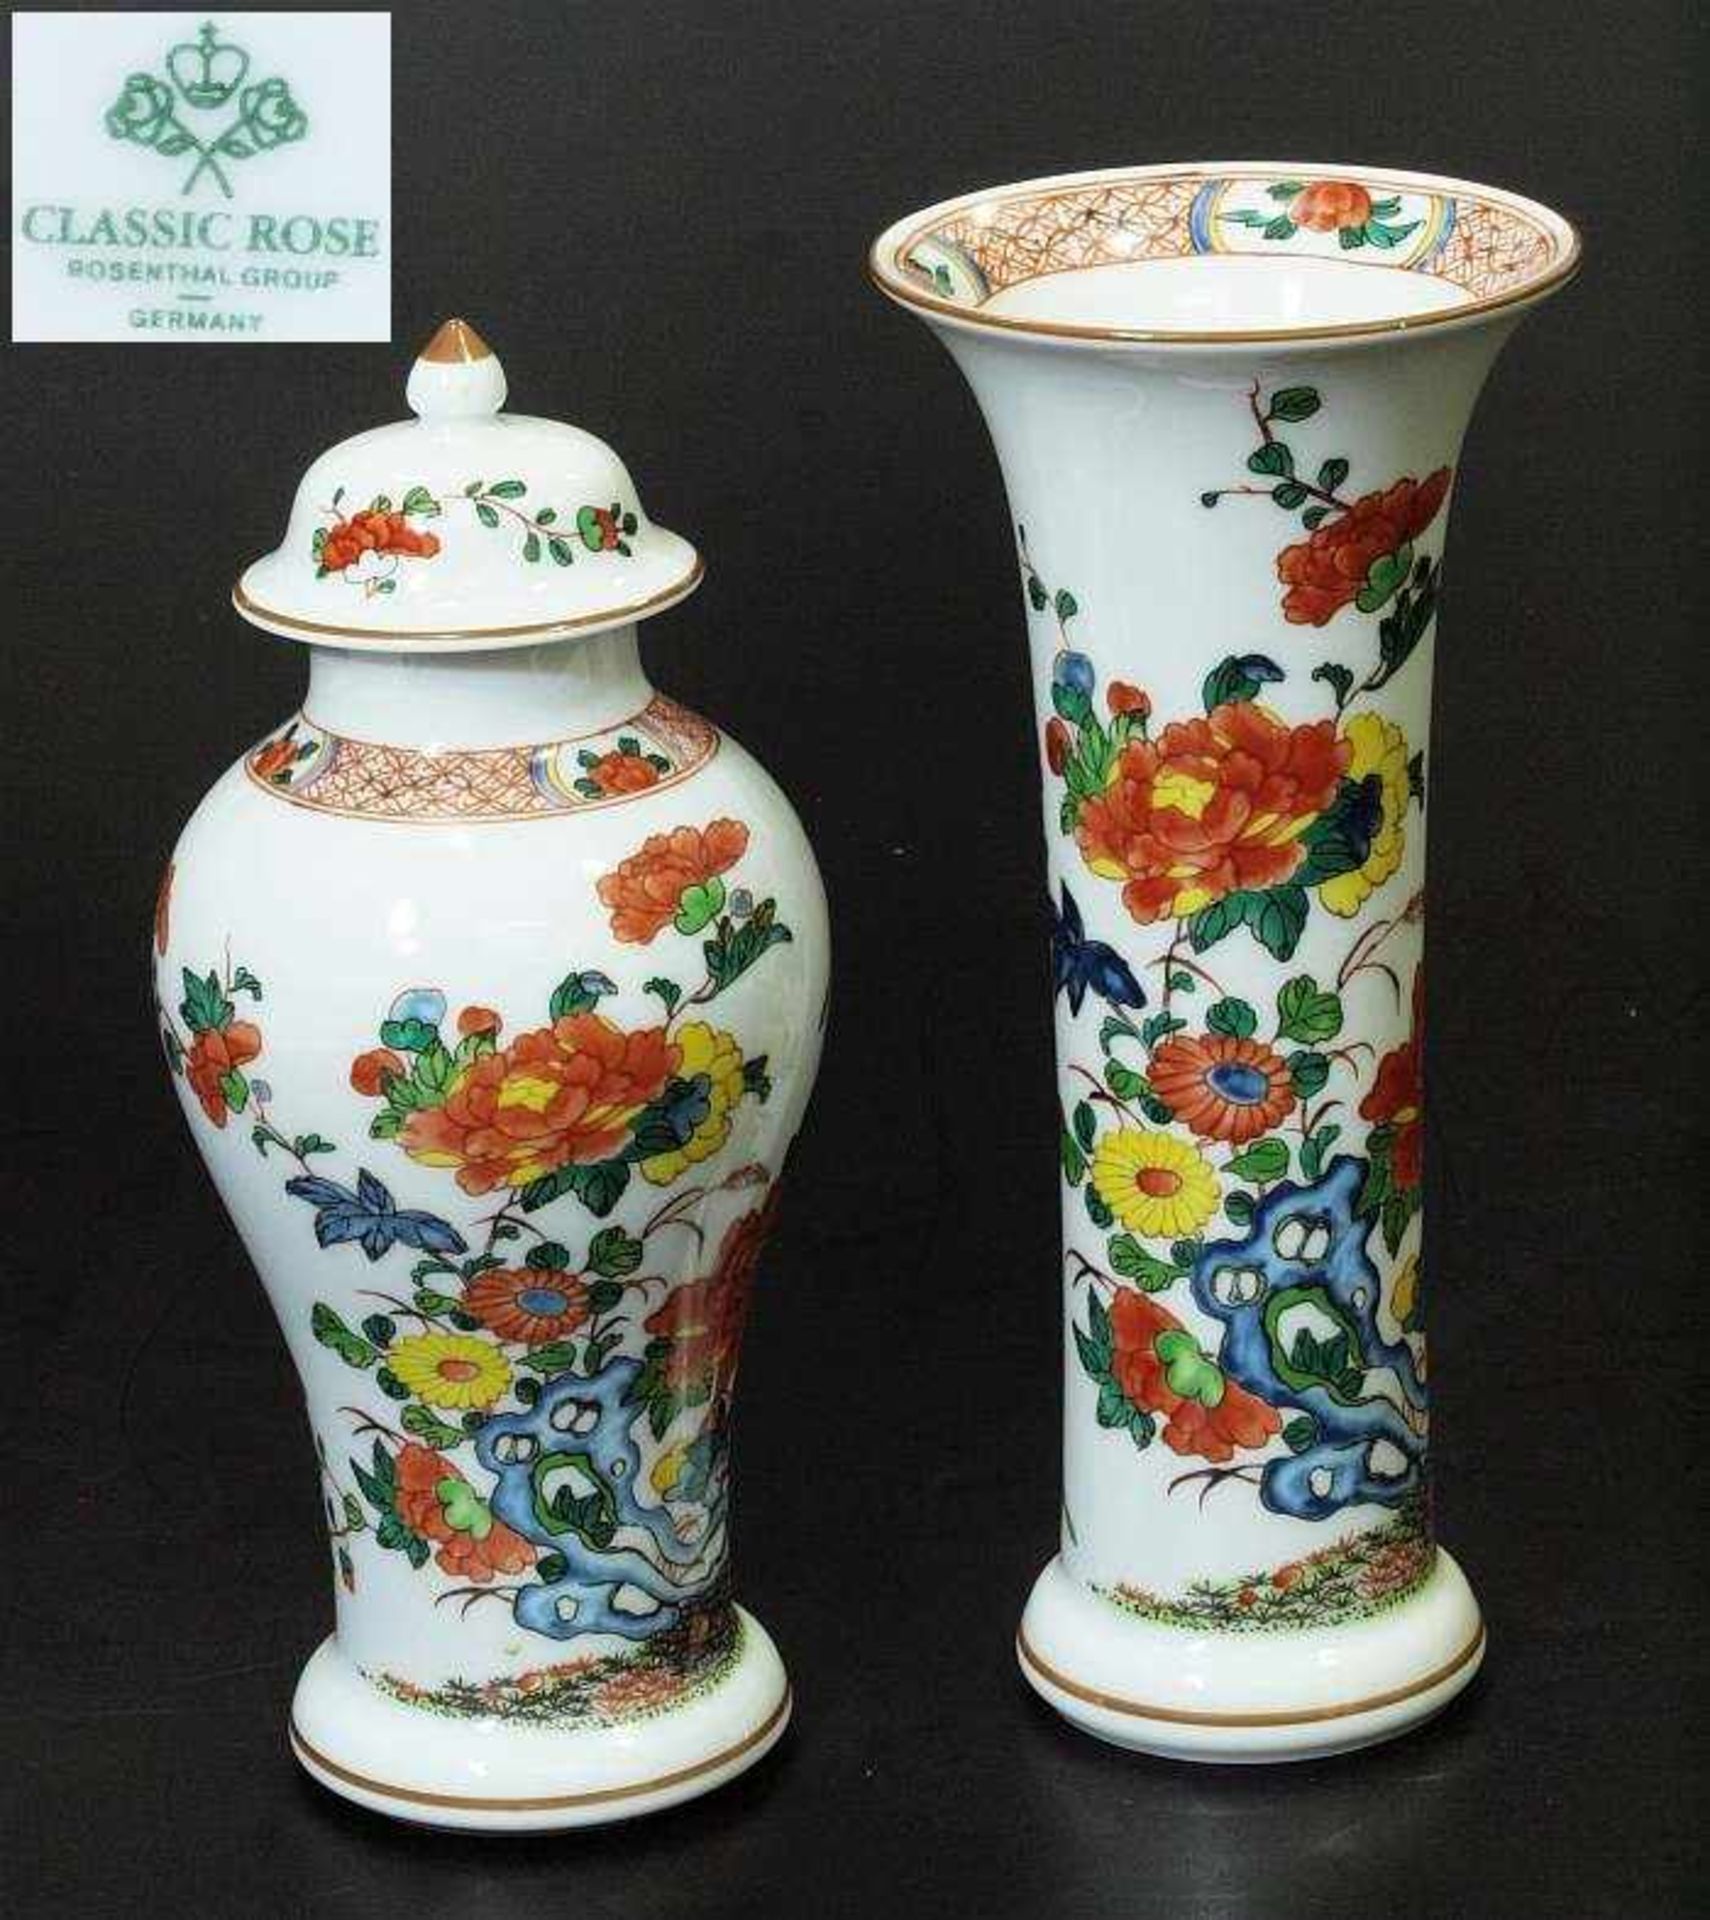 Designer-Vase. Deckelvase. Designer-Vase. Deckelvase. ROSENTHAL Classic Rose, Marke ab 1975. Wandung